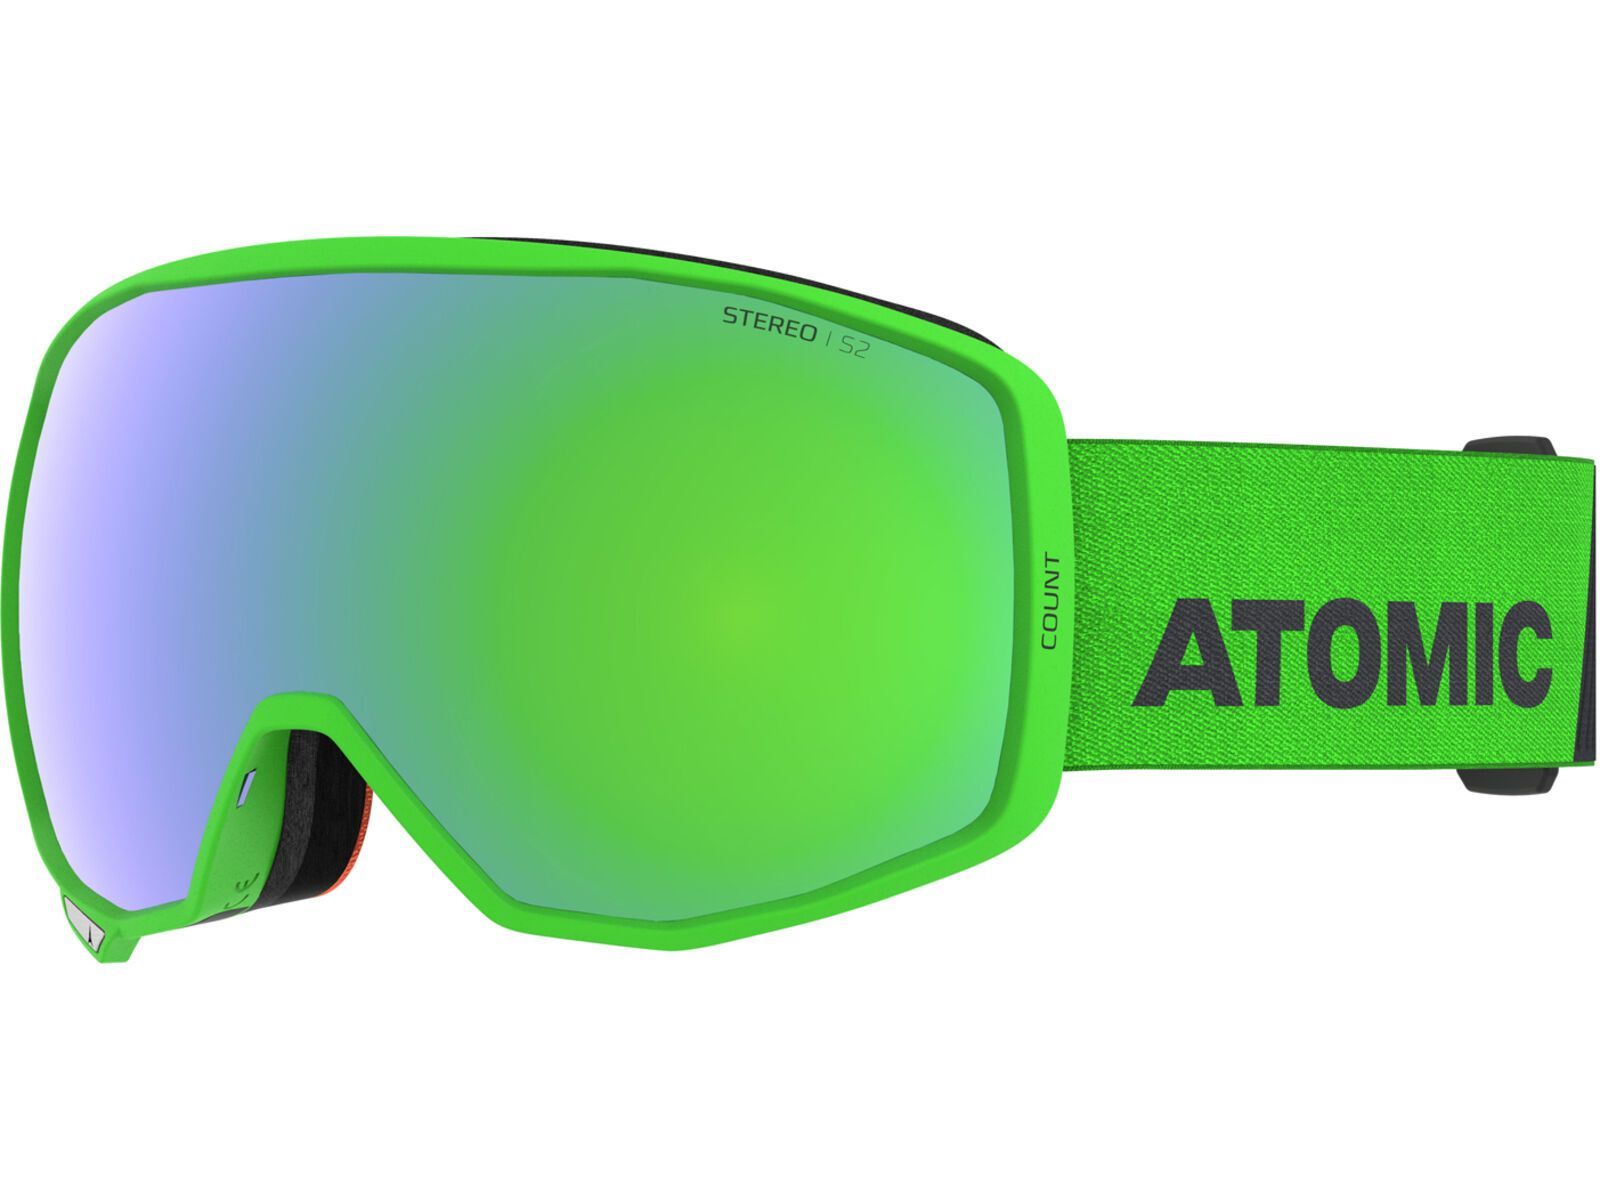 Atomic Count Stereo - Green, green | Bild 1